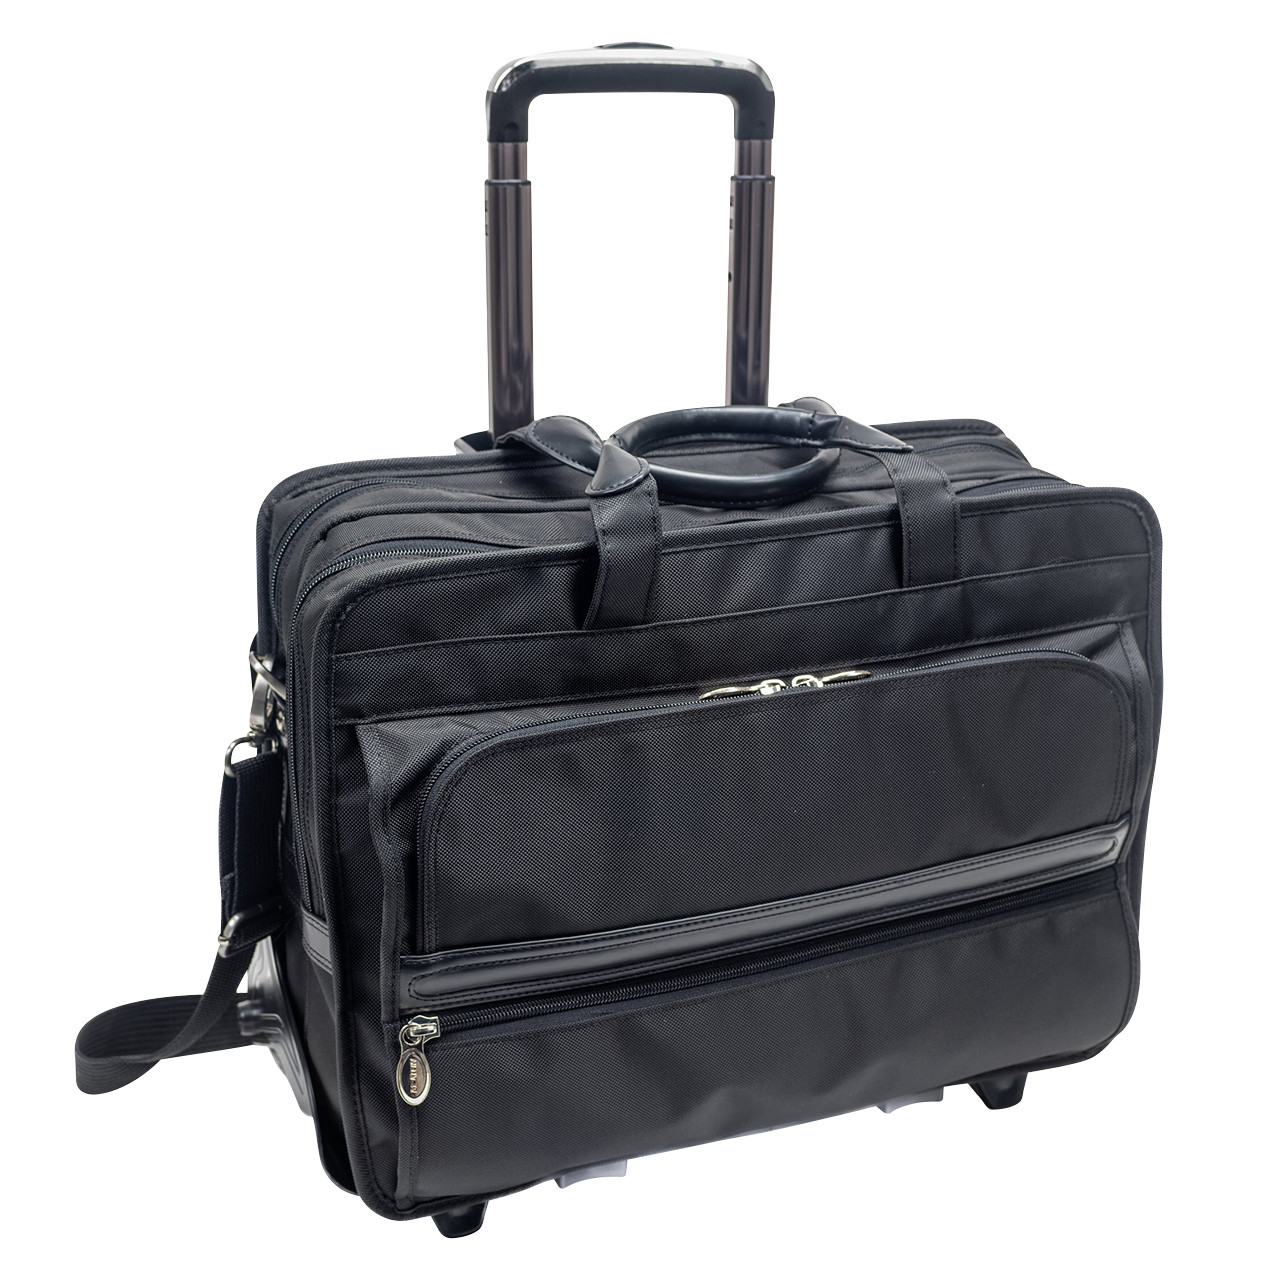 Franklin Covey Black Laptop Bag Business Organizer Travel Tote Purse